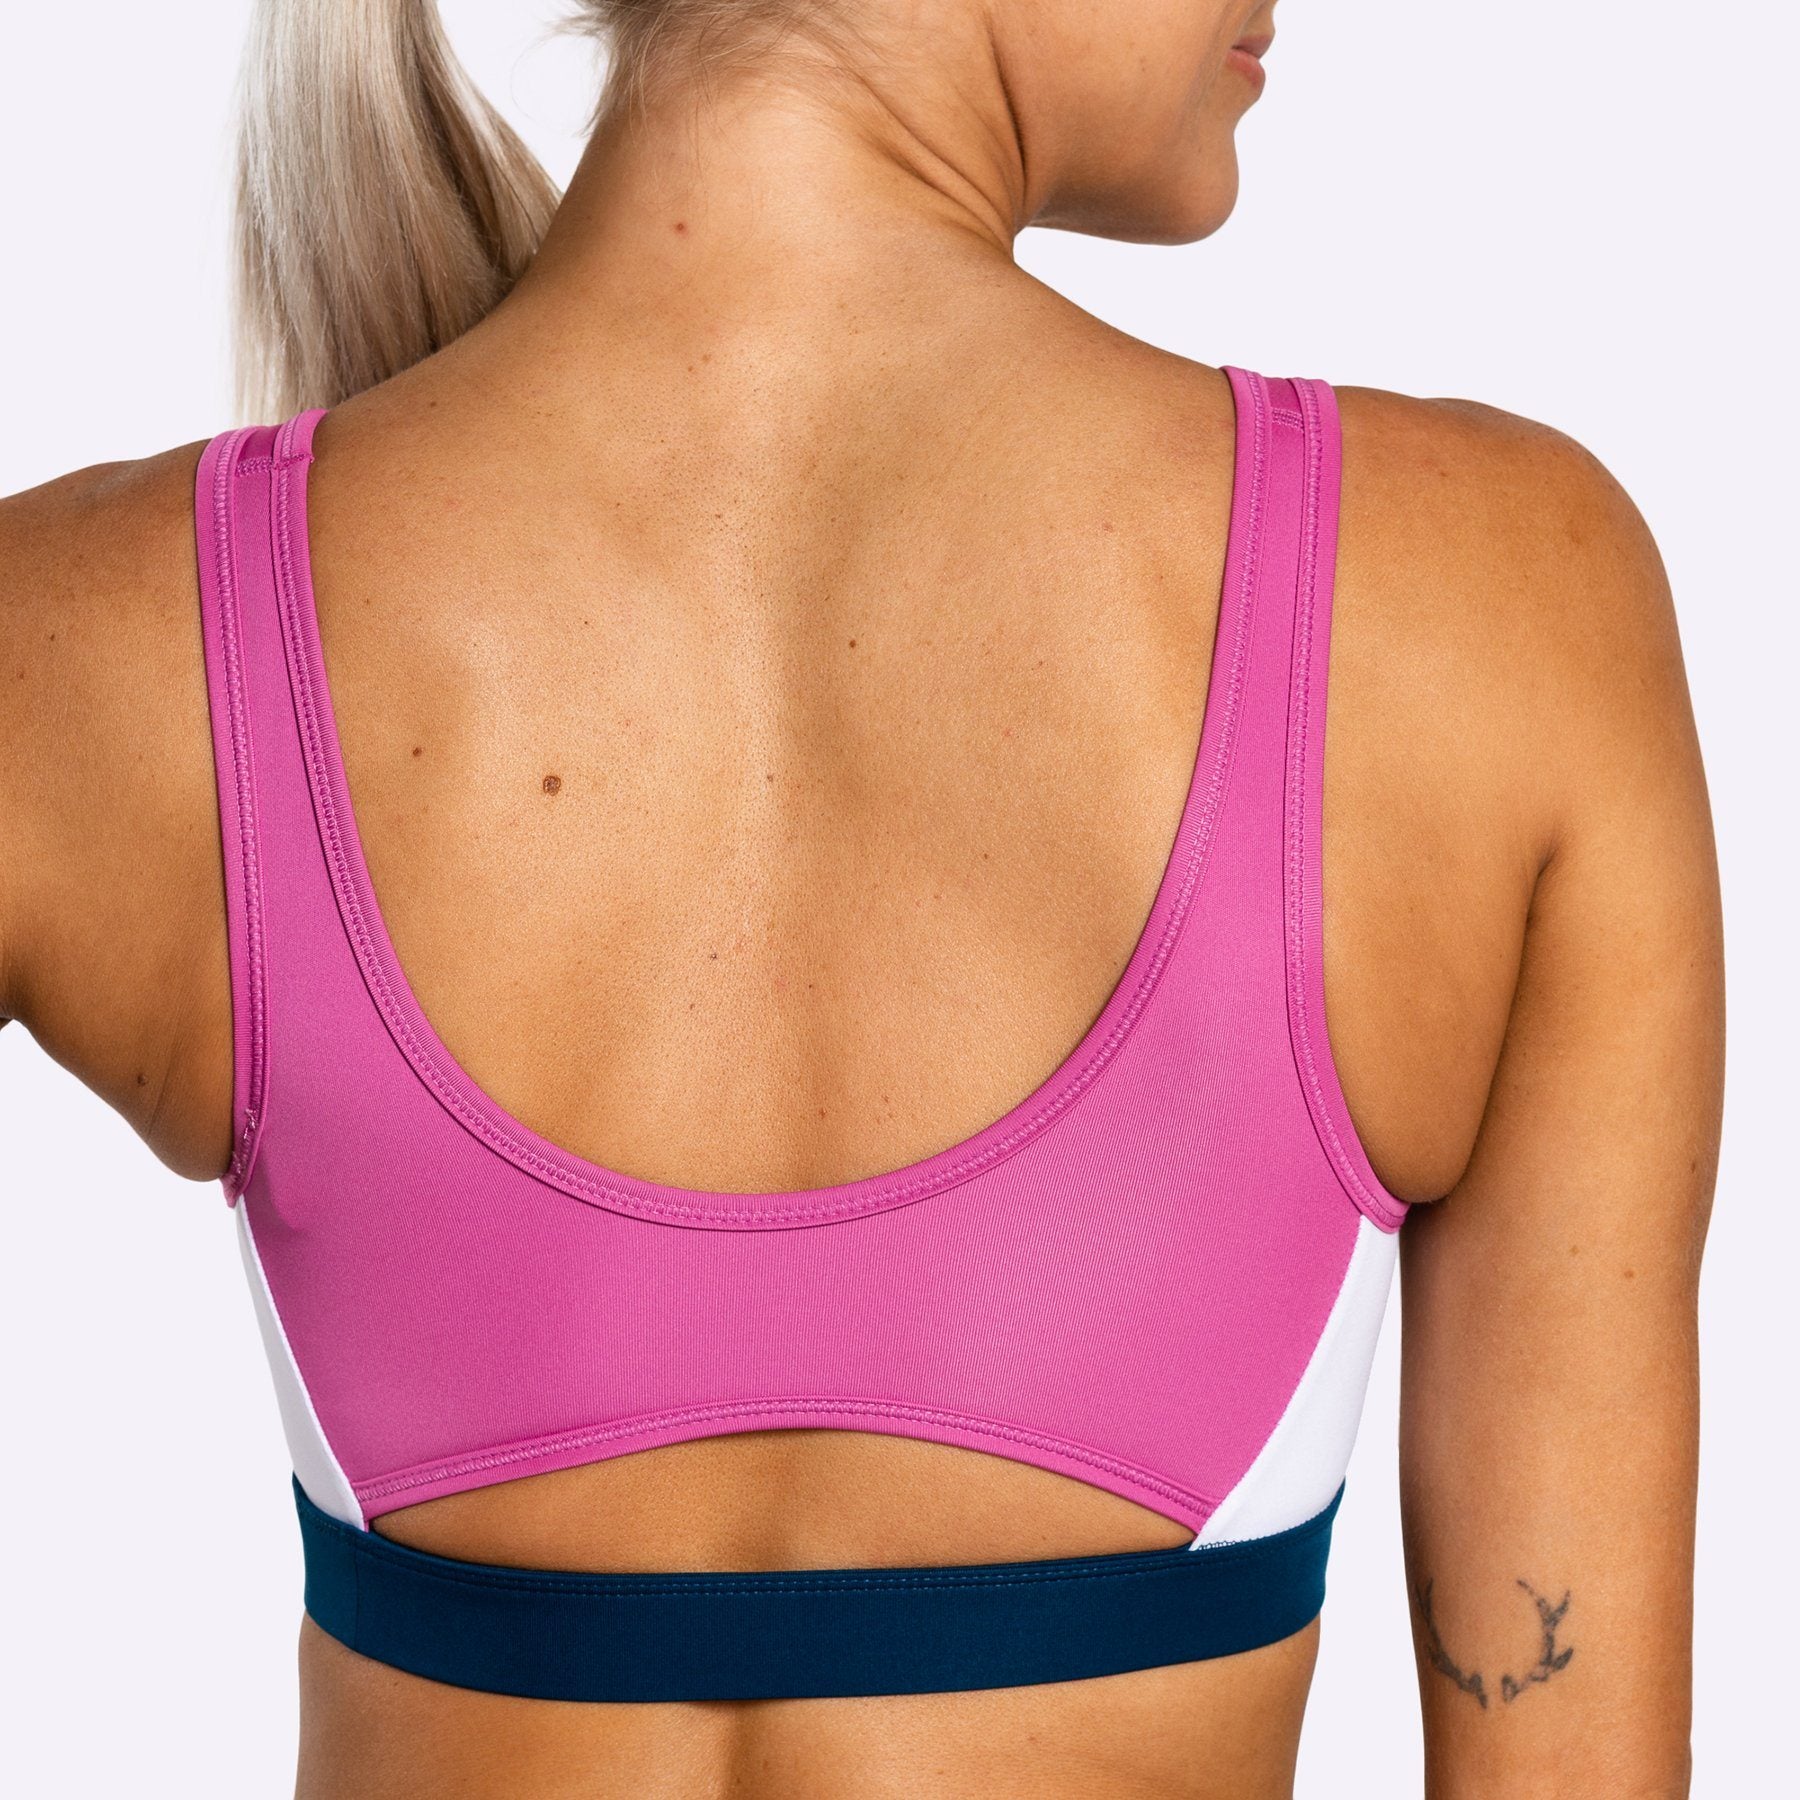 Nike - Swoosh Icon Clash Women's Medium-Support Sports Bra